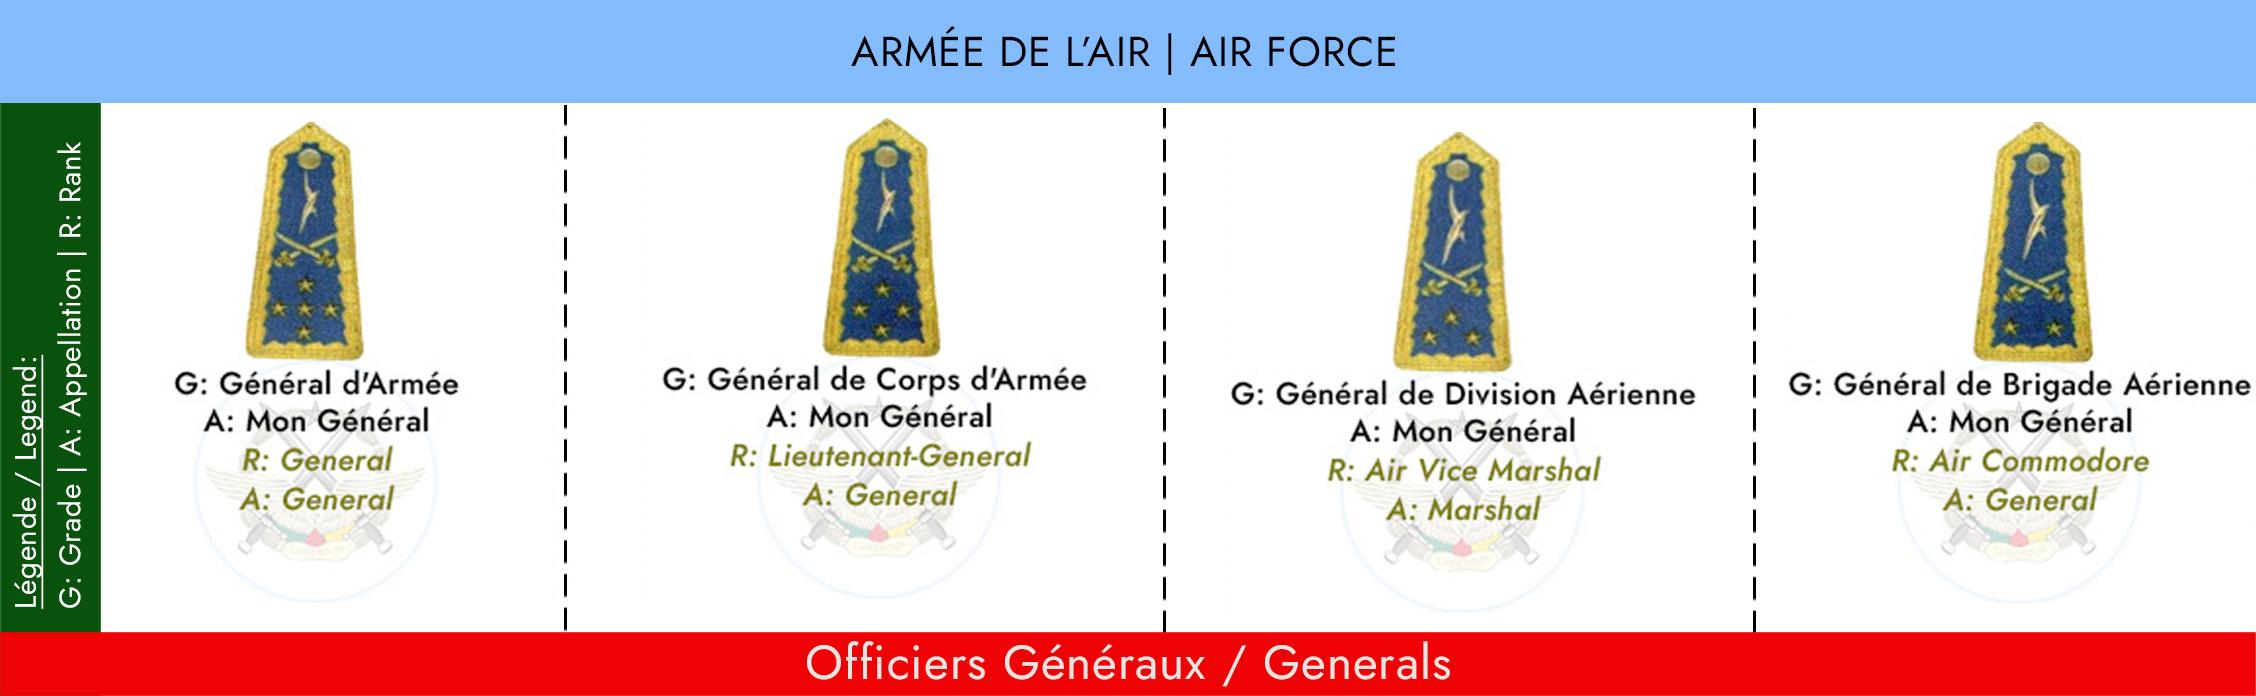 GRADES ET APPELLATIONS OFFICIER GENERAUX ARMEE DE L’AIR